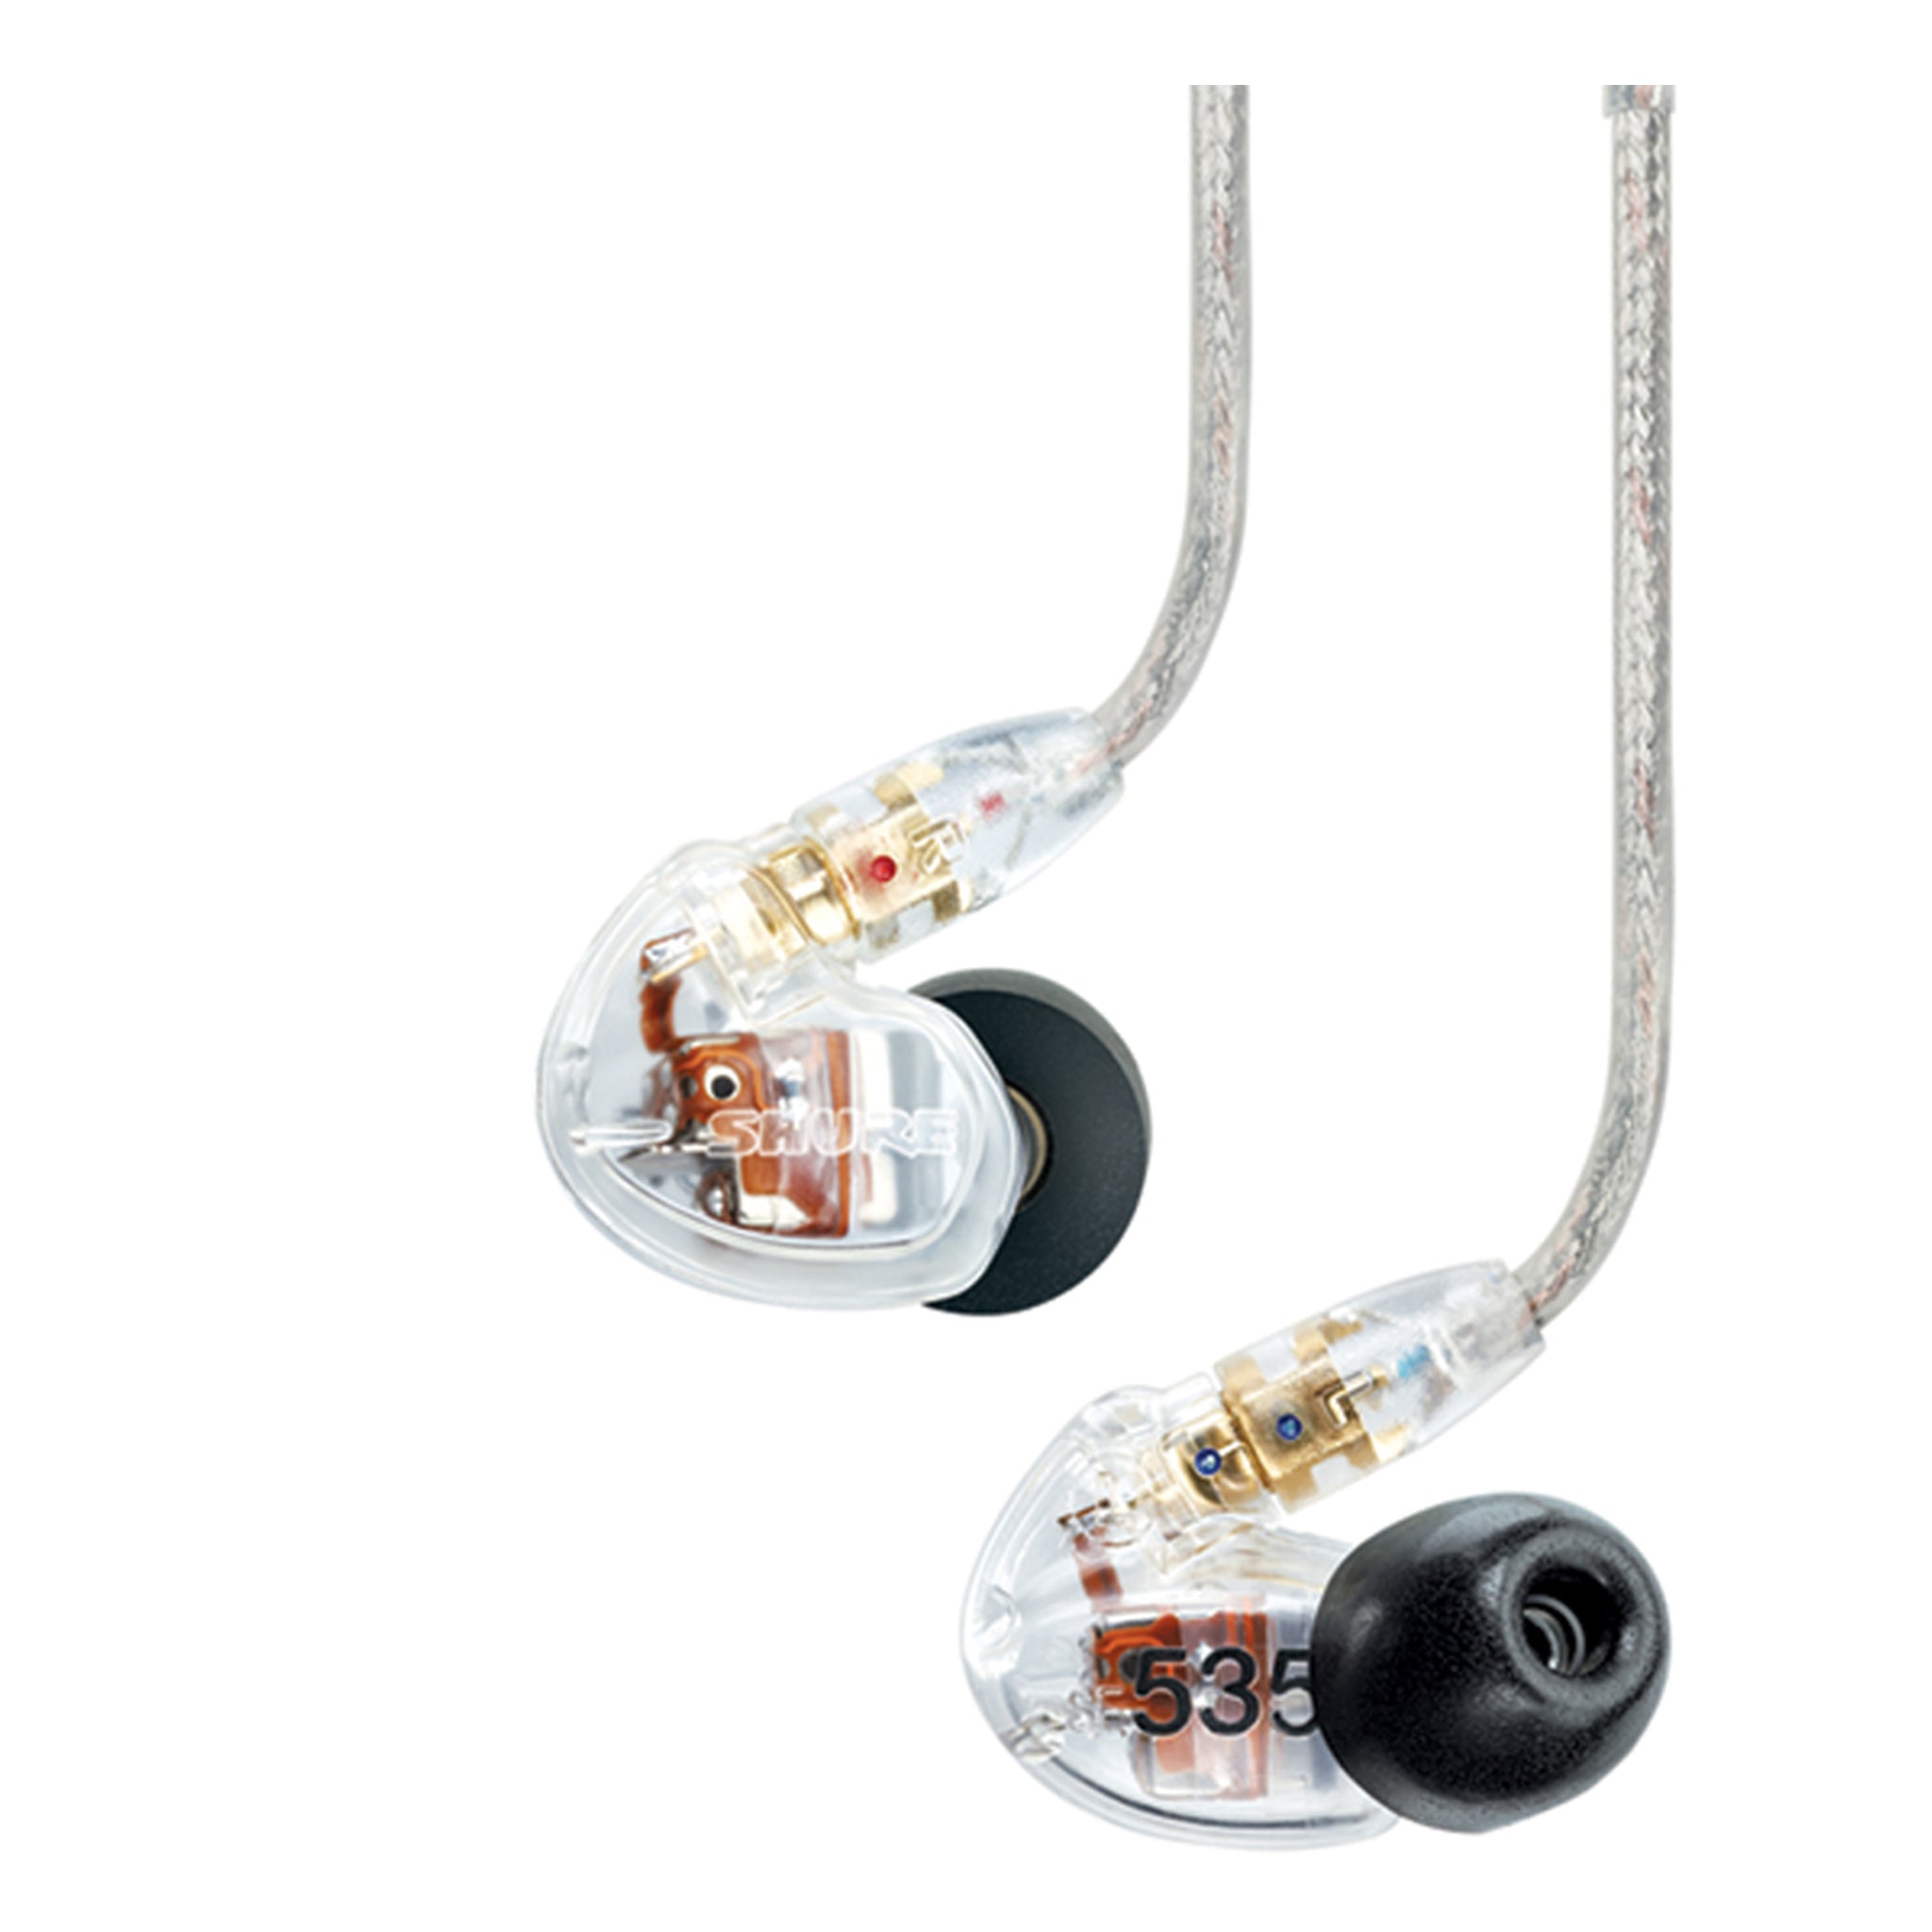 Shure SE535-CL Professional Sound Isolating Earphones